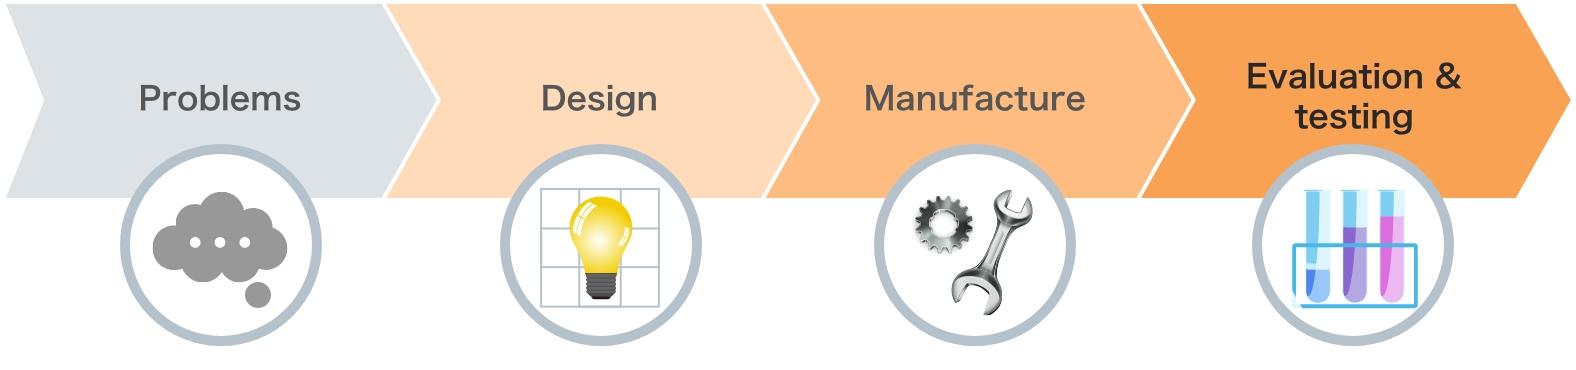 Problems,Design,Manufacture,Evaluation & testing